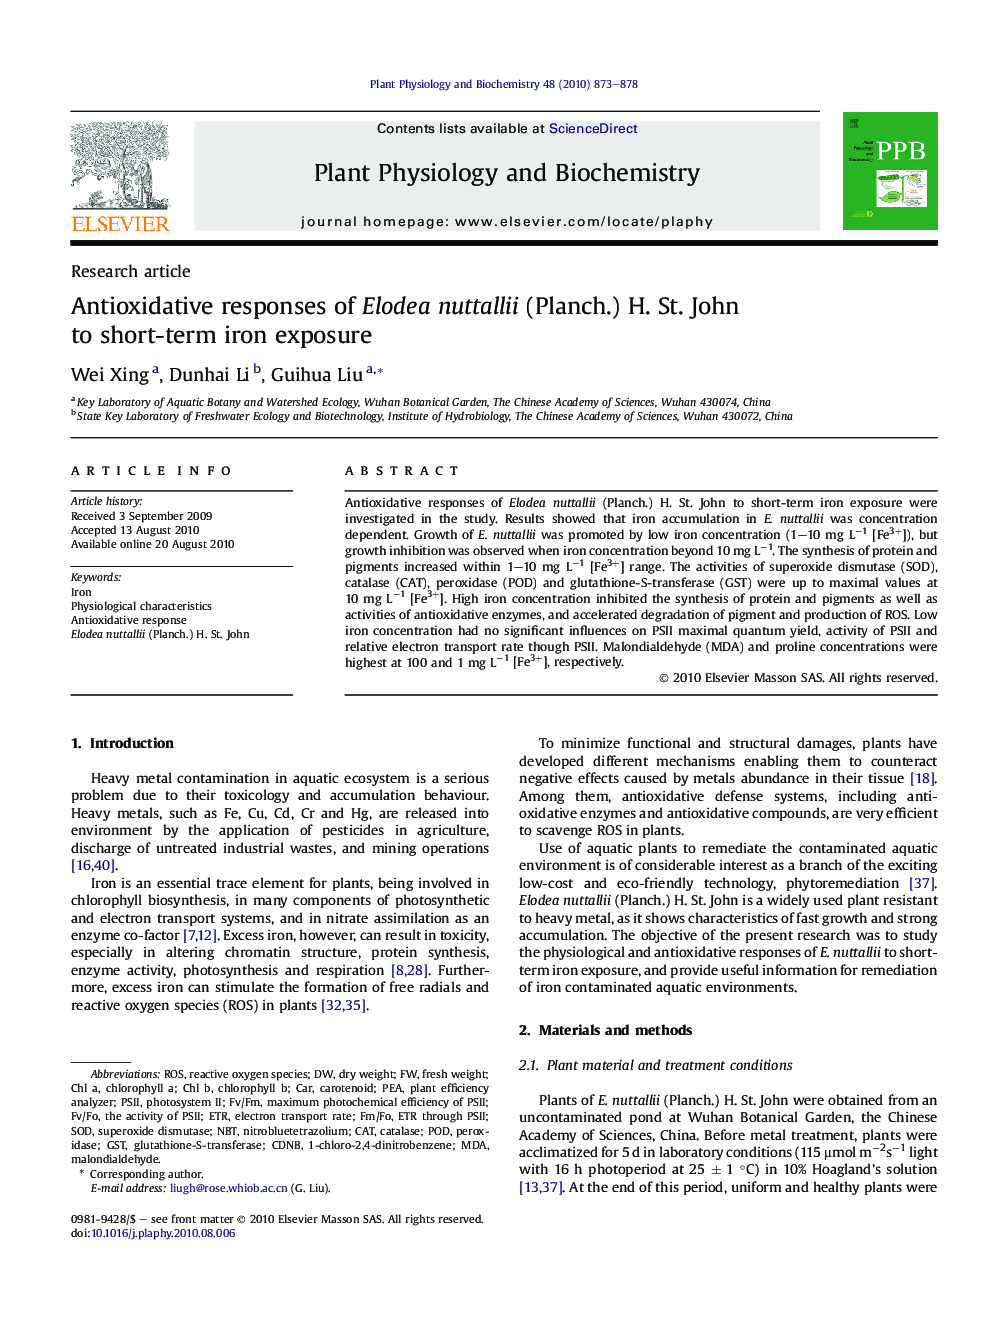 Antioxidative responses of Elodea nuttallii (Planch.) H. St. John to short-term iron exposure